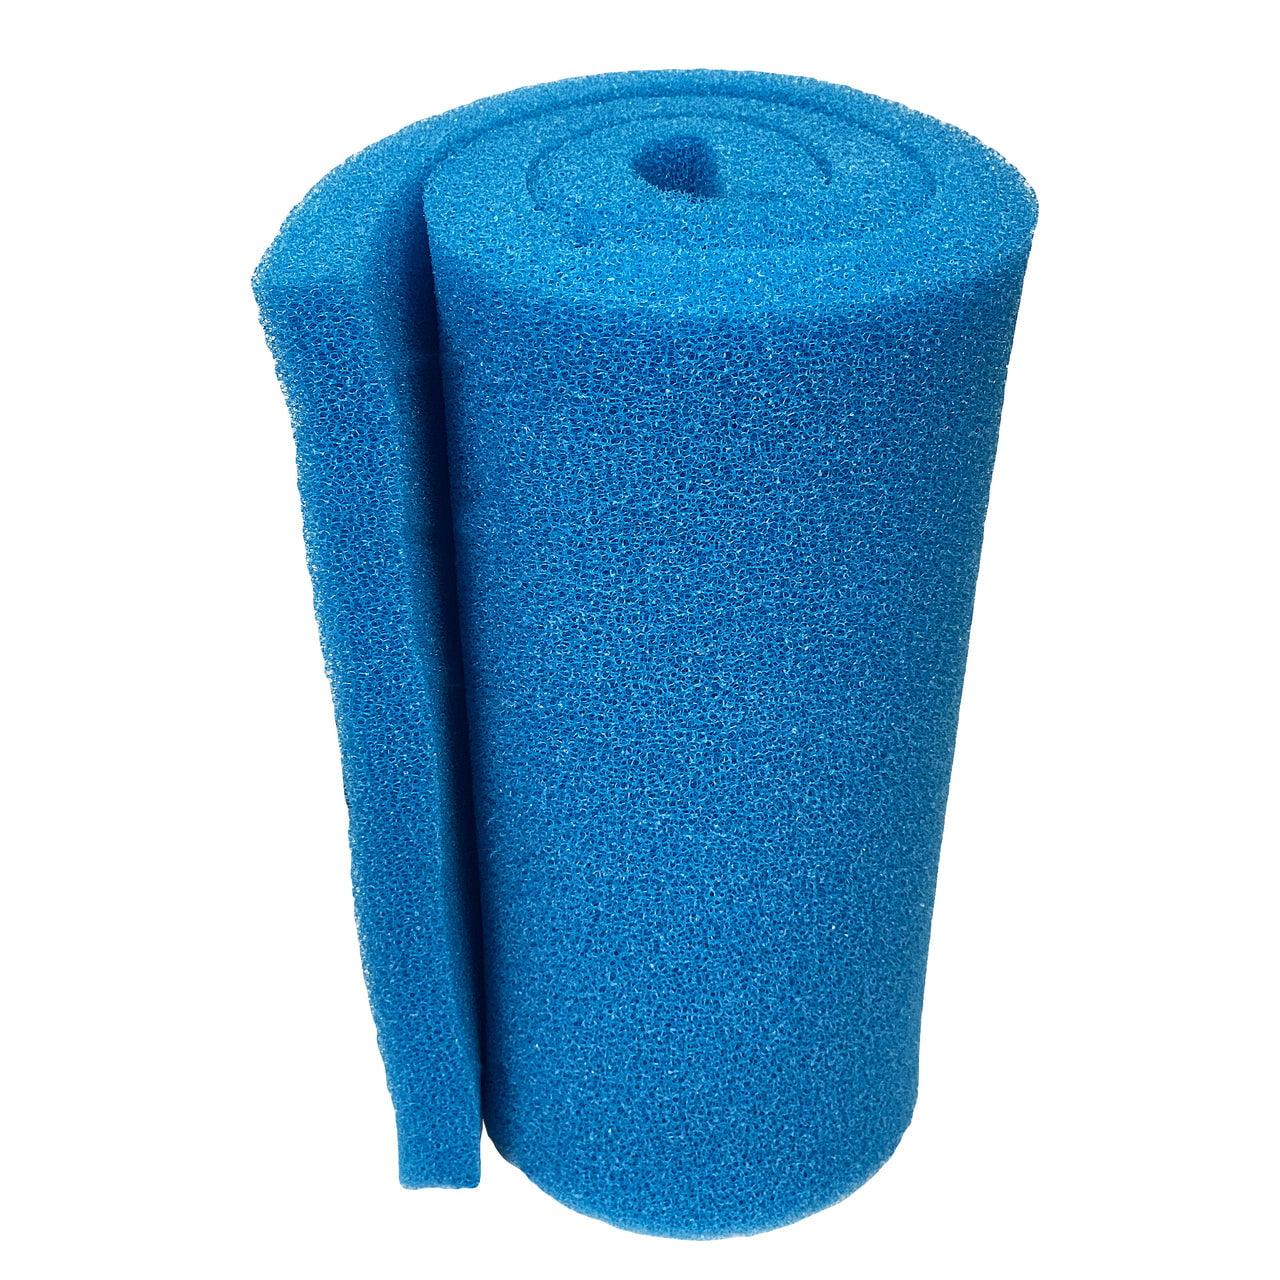 BILLIOTEAM 2 Pack Filter Foam Sponges,7.5 x 4.7 x 2.75,Aquarium  Cut-to-Size Sponge Filter Media Foam Pad Sheet for for Aquarium Fish Tank  Pond Sump